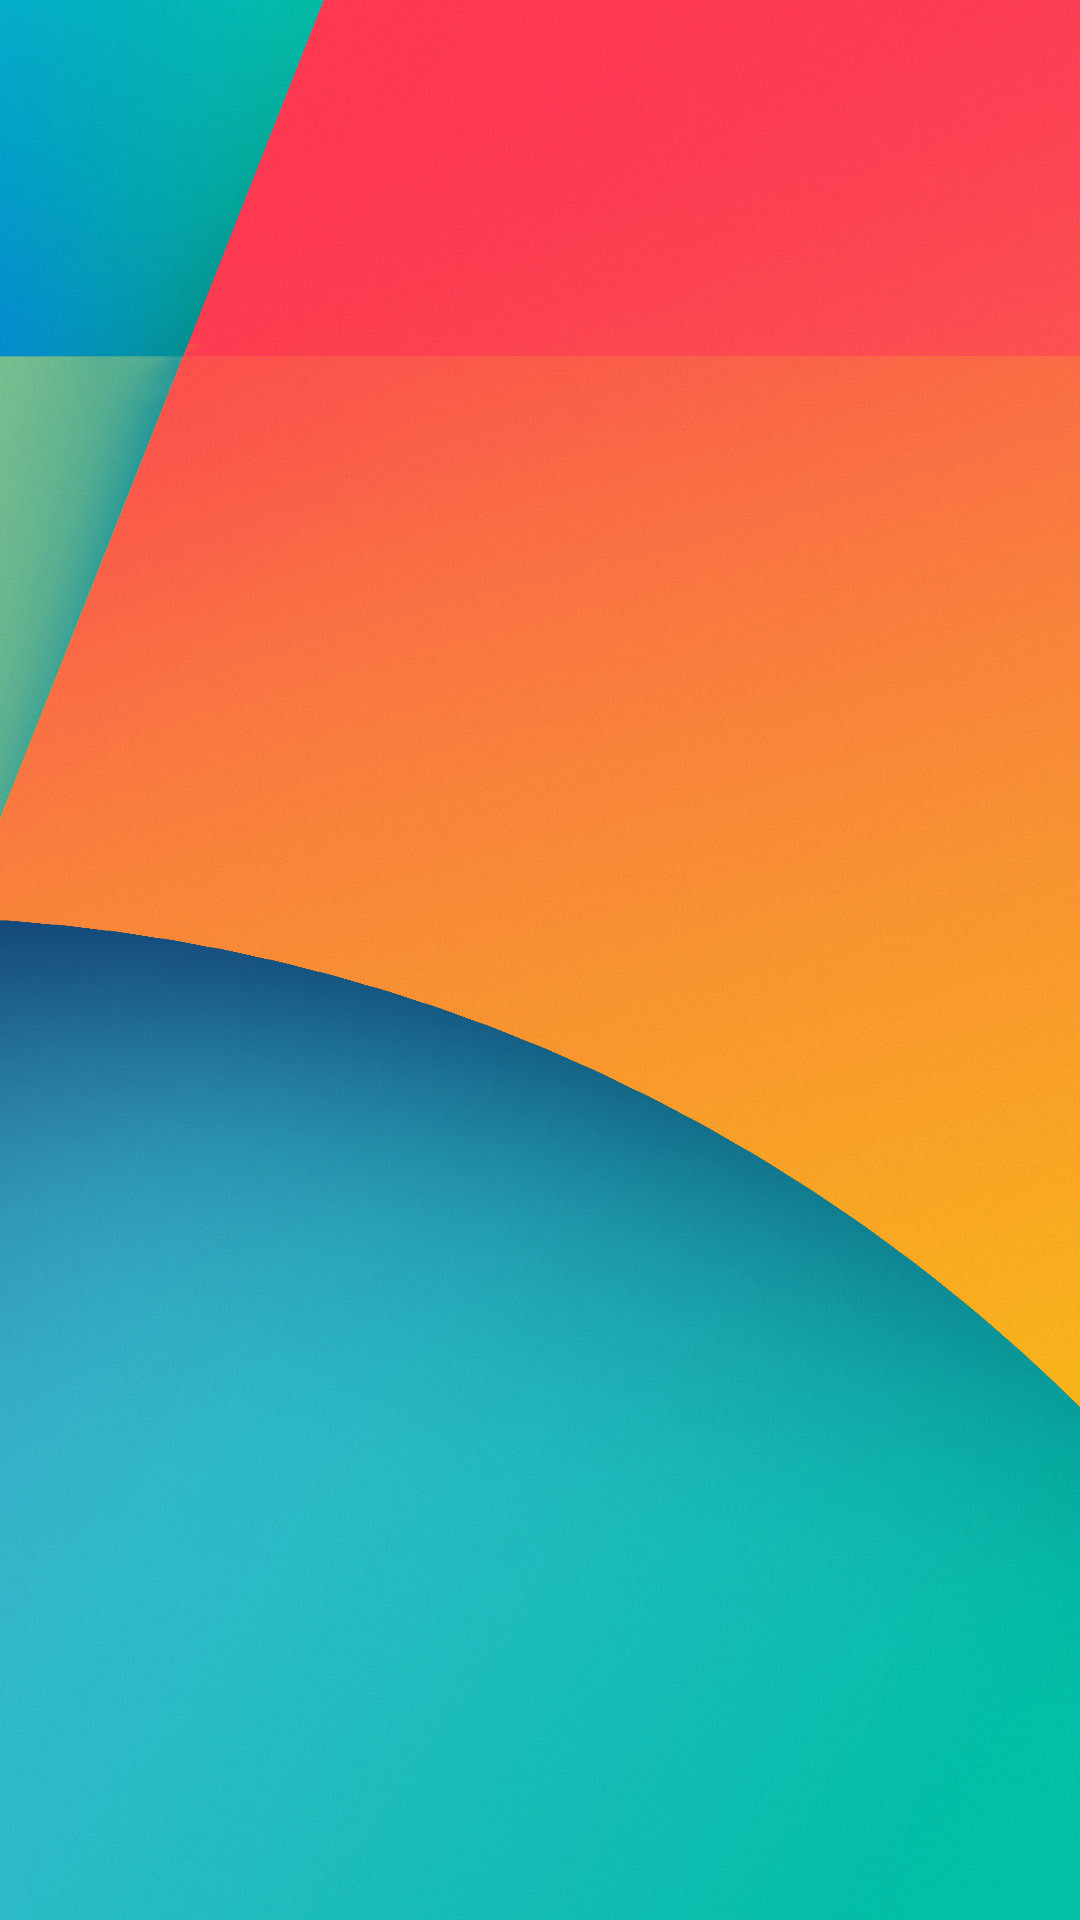 1080x1920 Nexus 5 Android 4.4 KitKat Orange Blue Android Wallpaper free